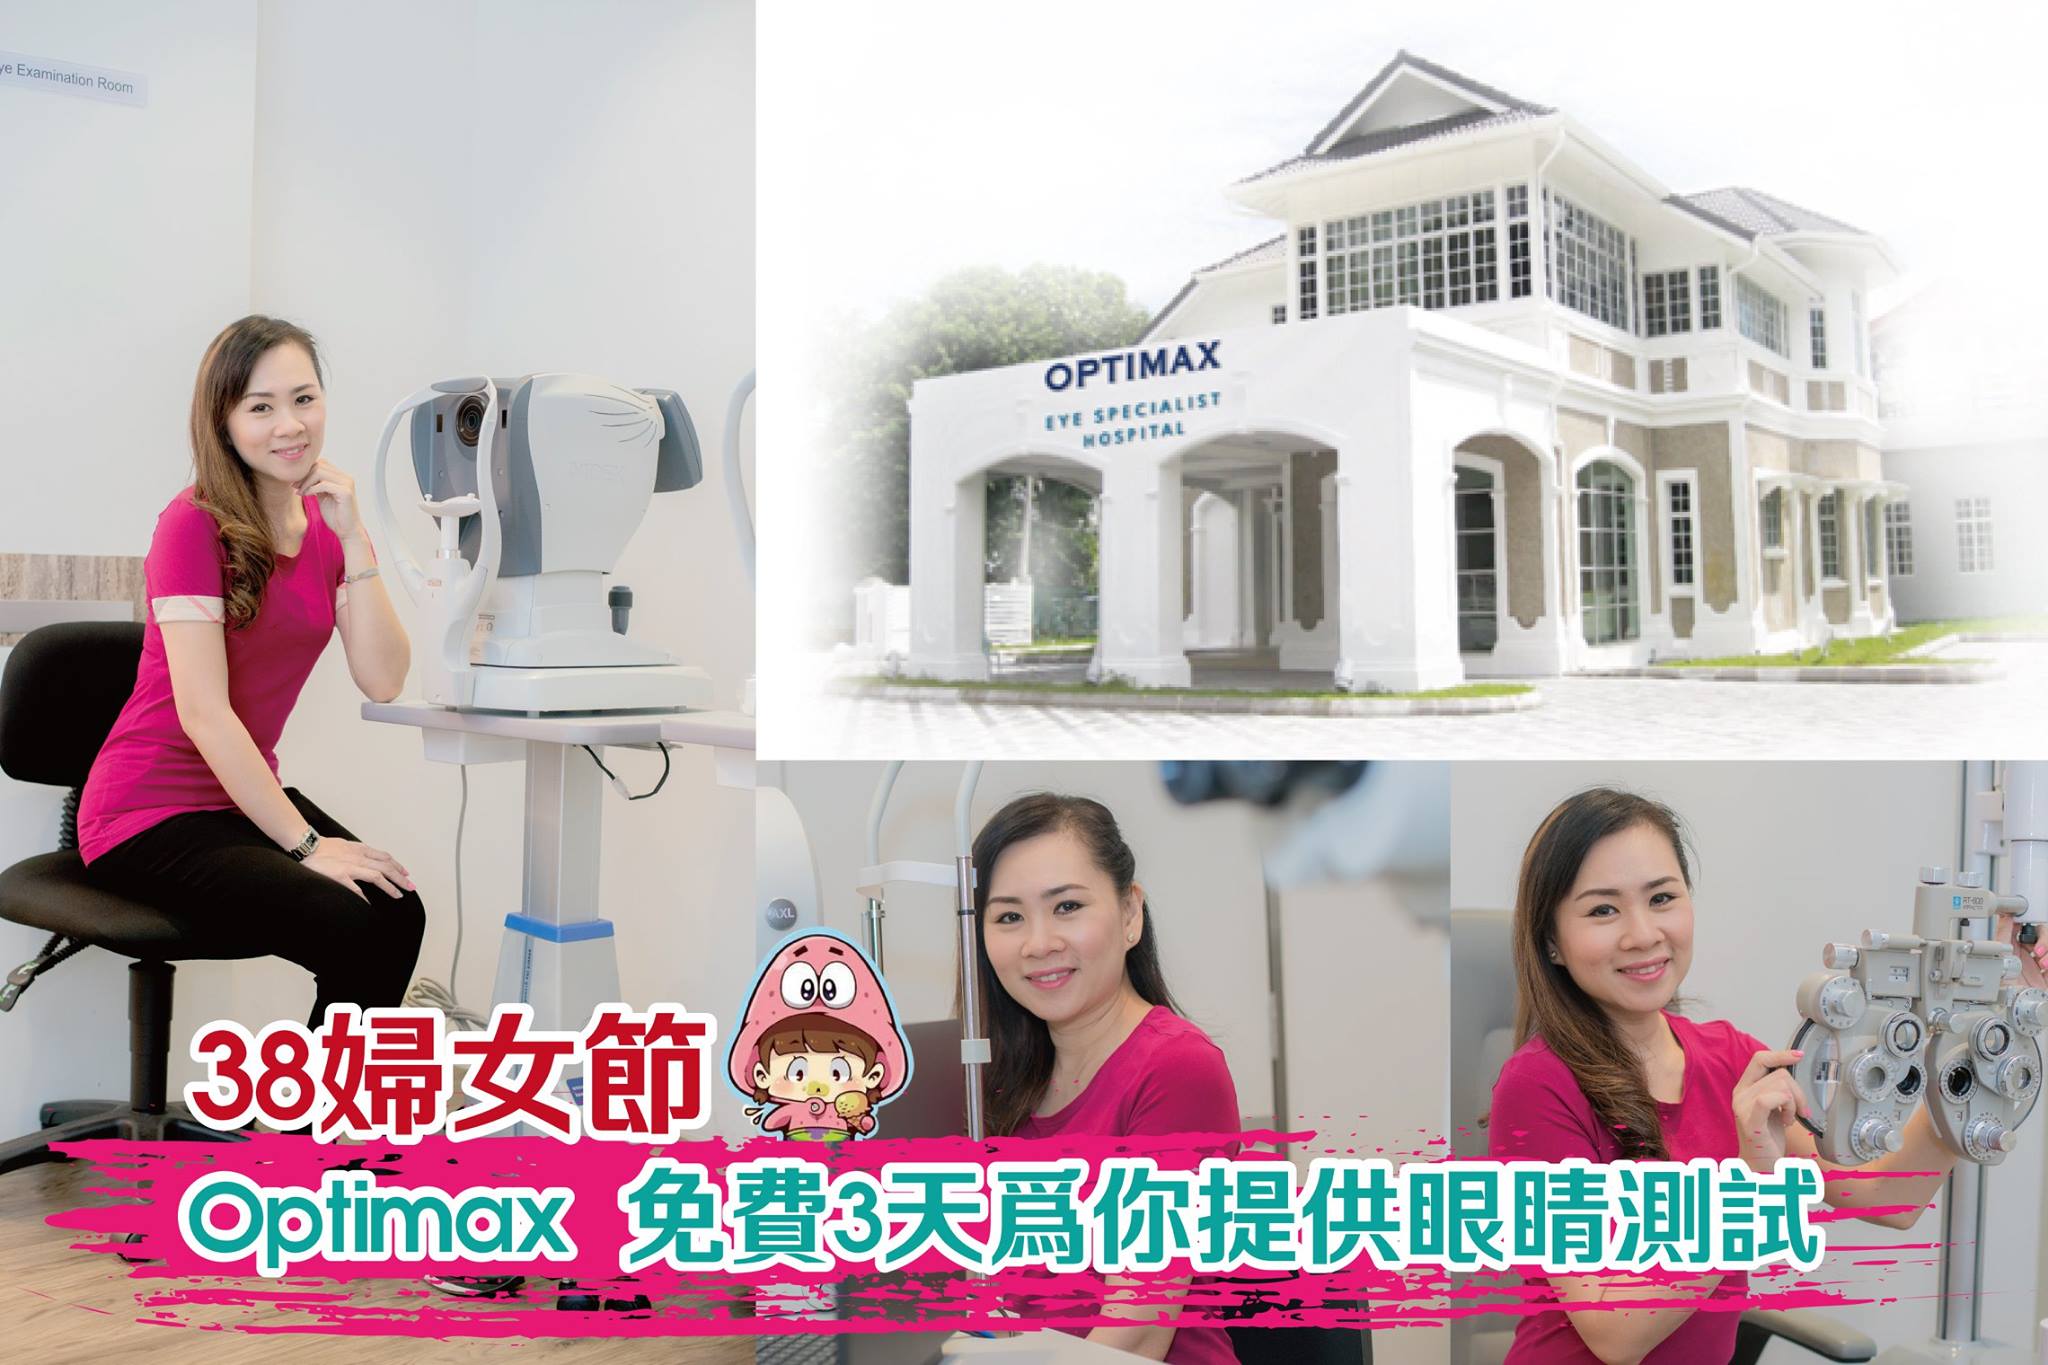 Optimax Eye Specialist Hospital Penang